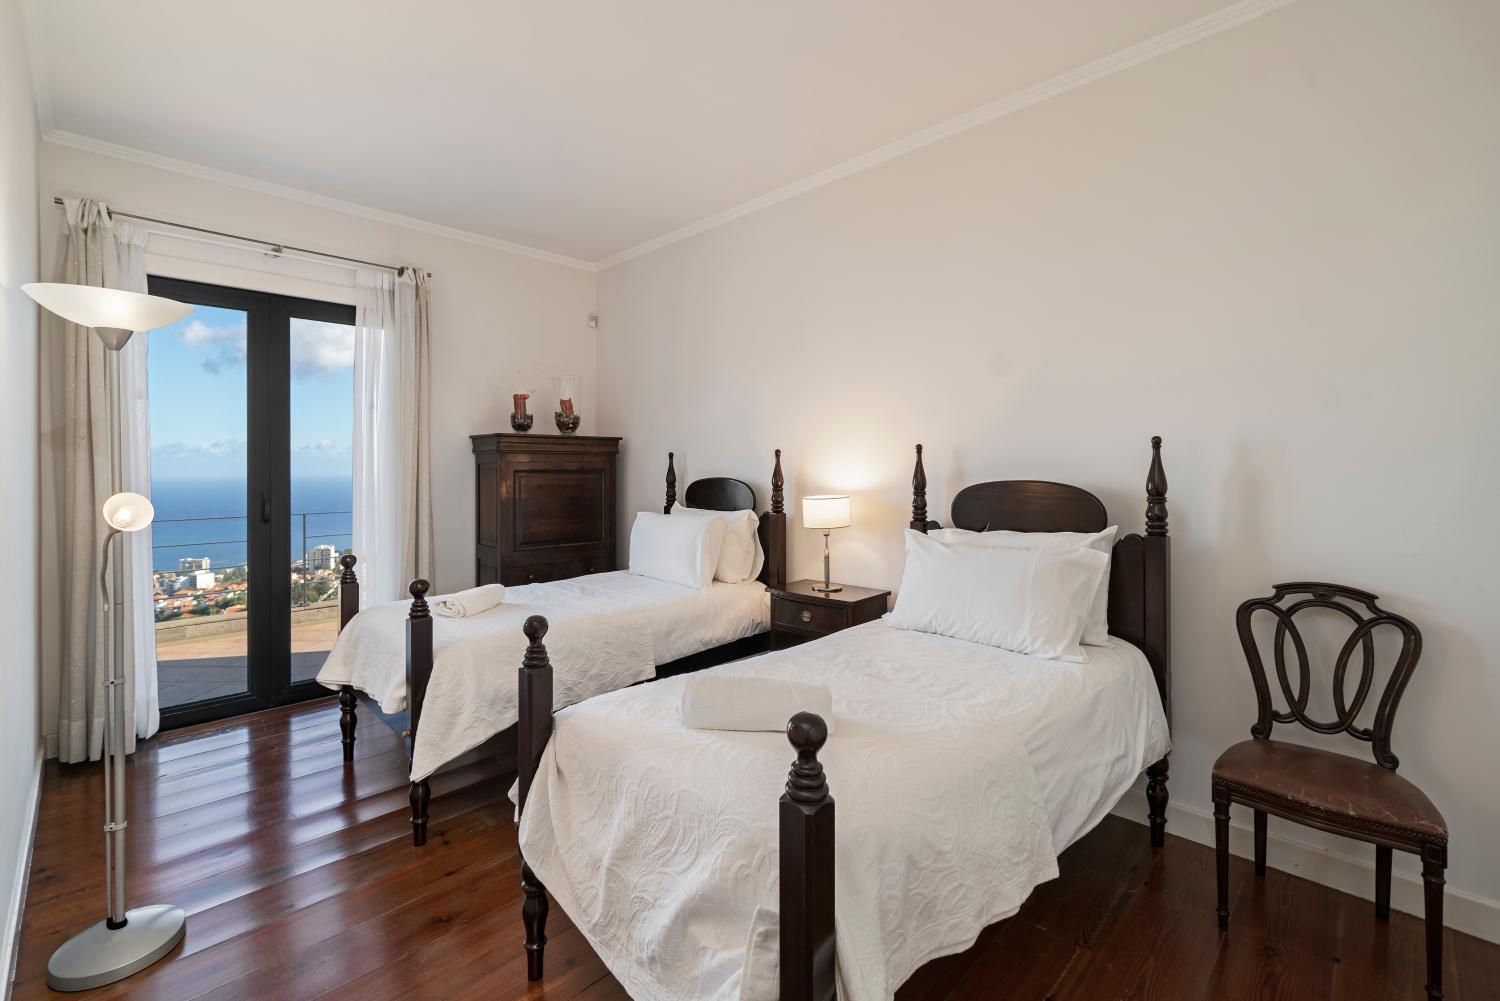 Exquisite Madeira Villa Villa Funchal Luz 5 Bedroom Heated Pool Sea Views Games Room Fu, Funchal